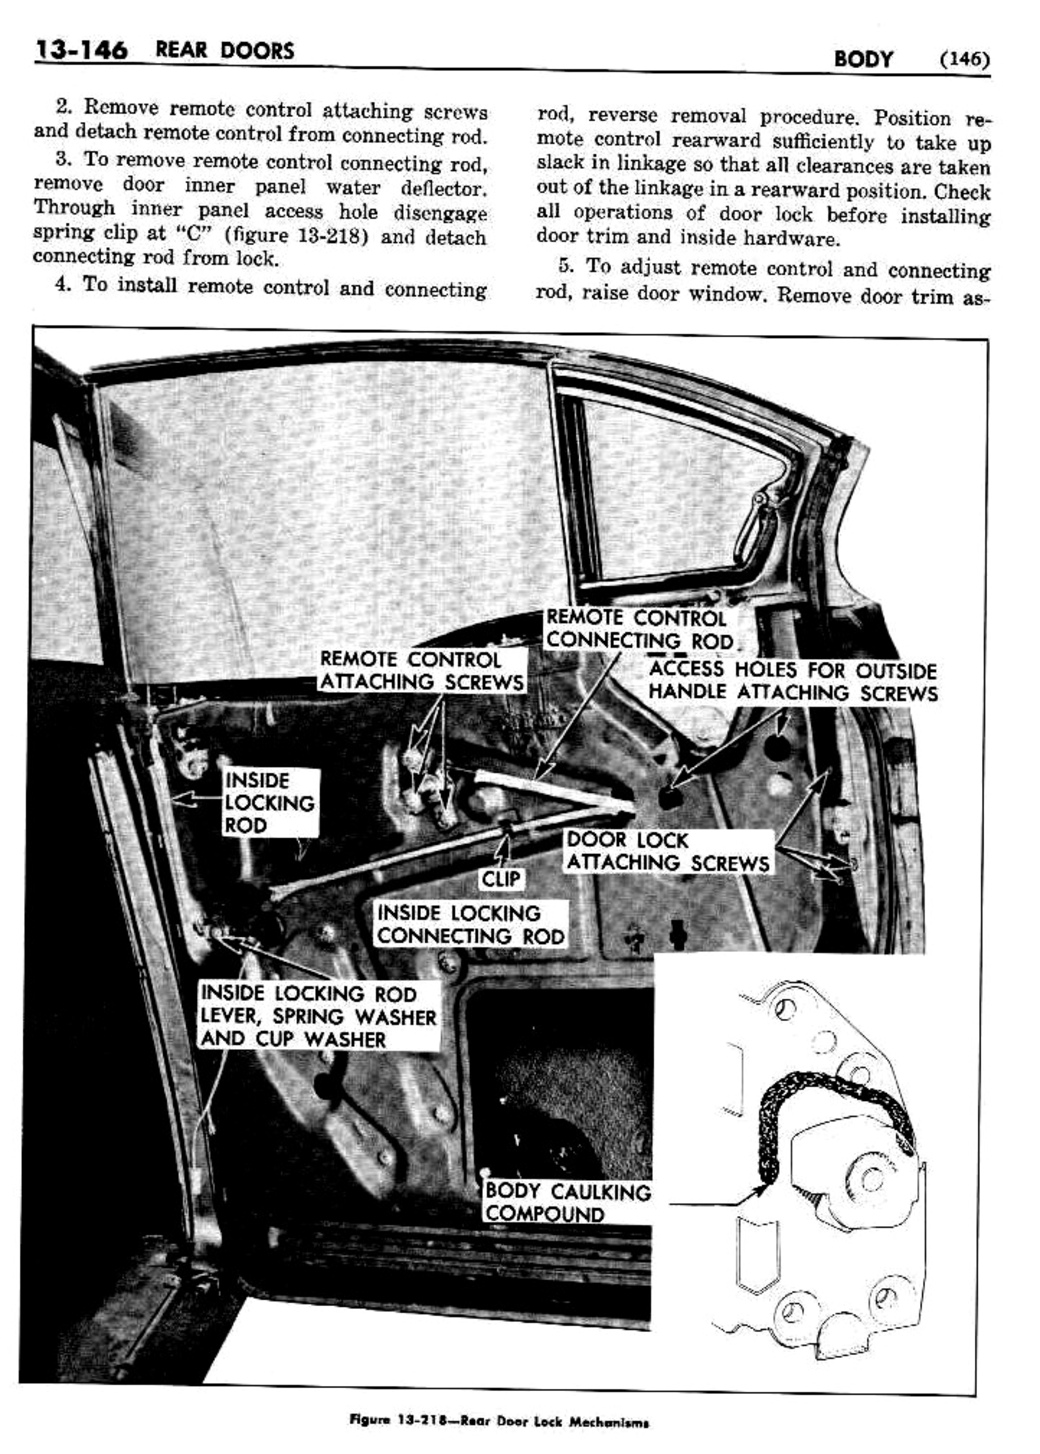 n_1958 Buick Body Service Manual-147-147.jpg